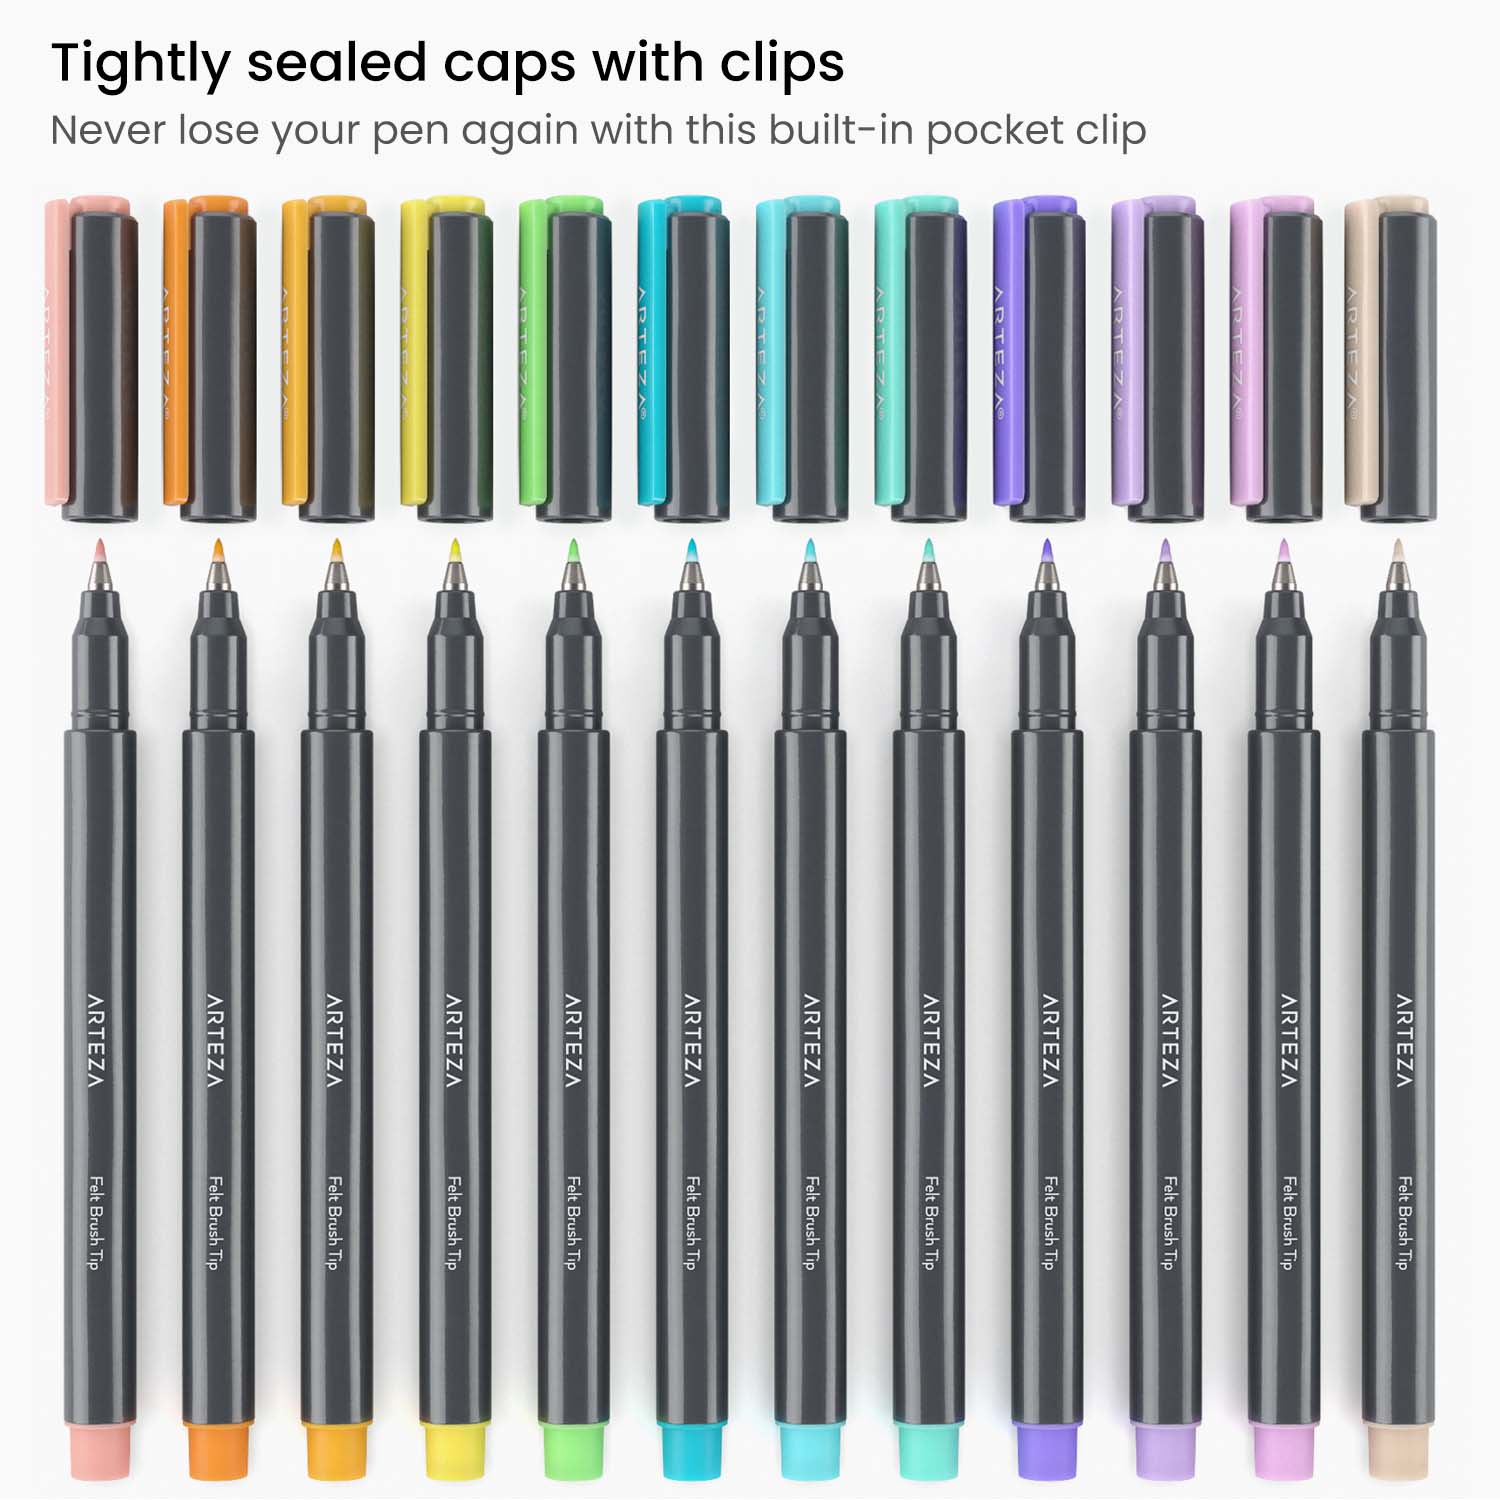 Arteza Set Of Black Felt Brush Tip Pens - 12 Pack : Target